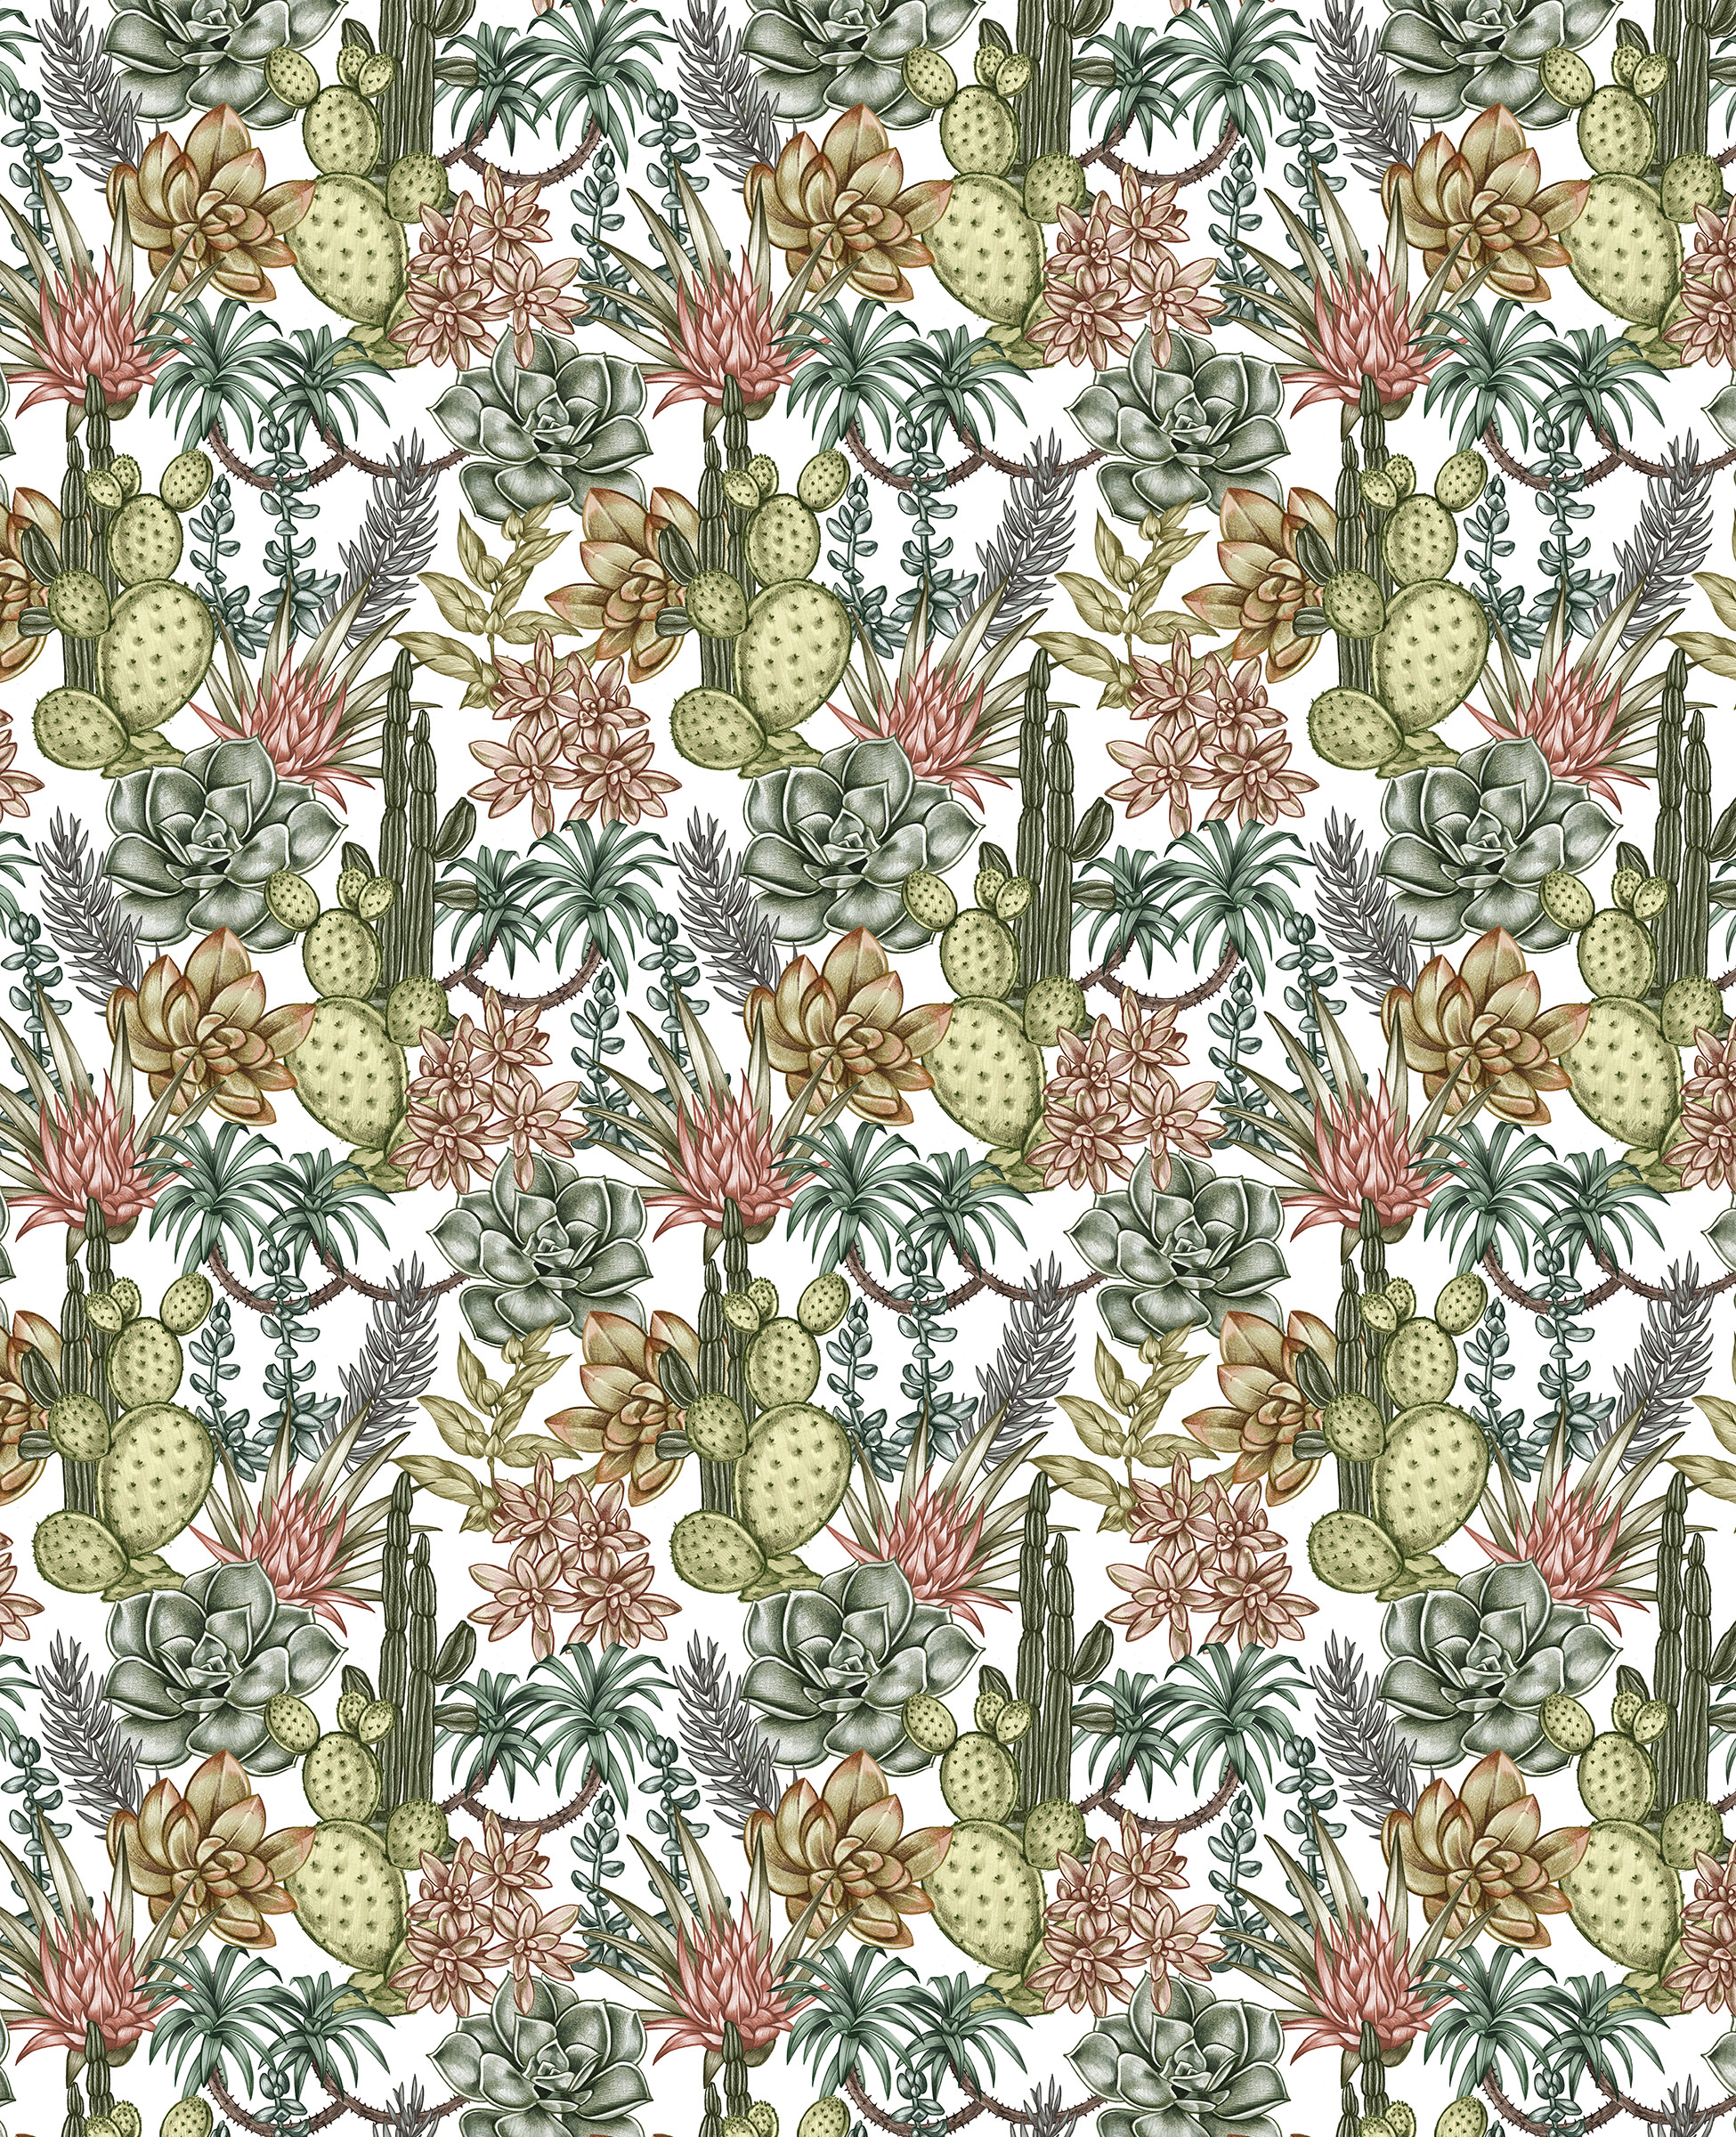 AOW_24x32_wallpaper_Succulents.jpg